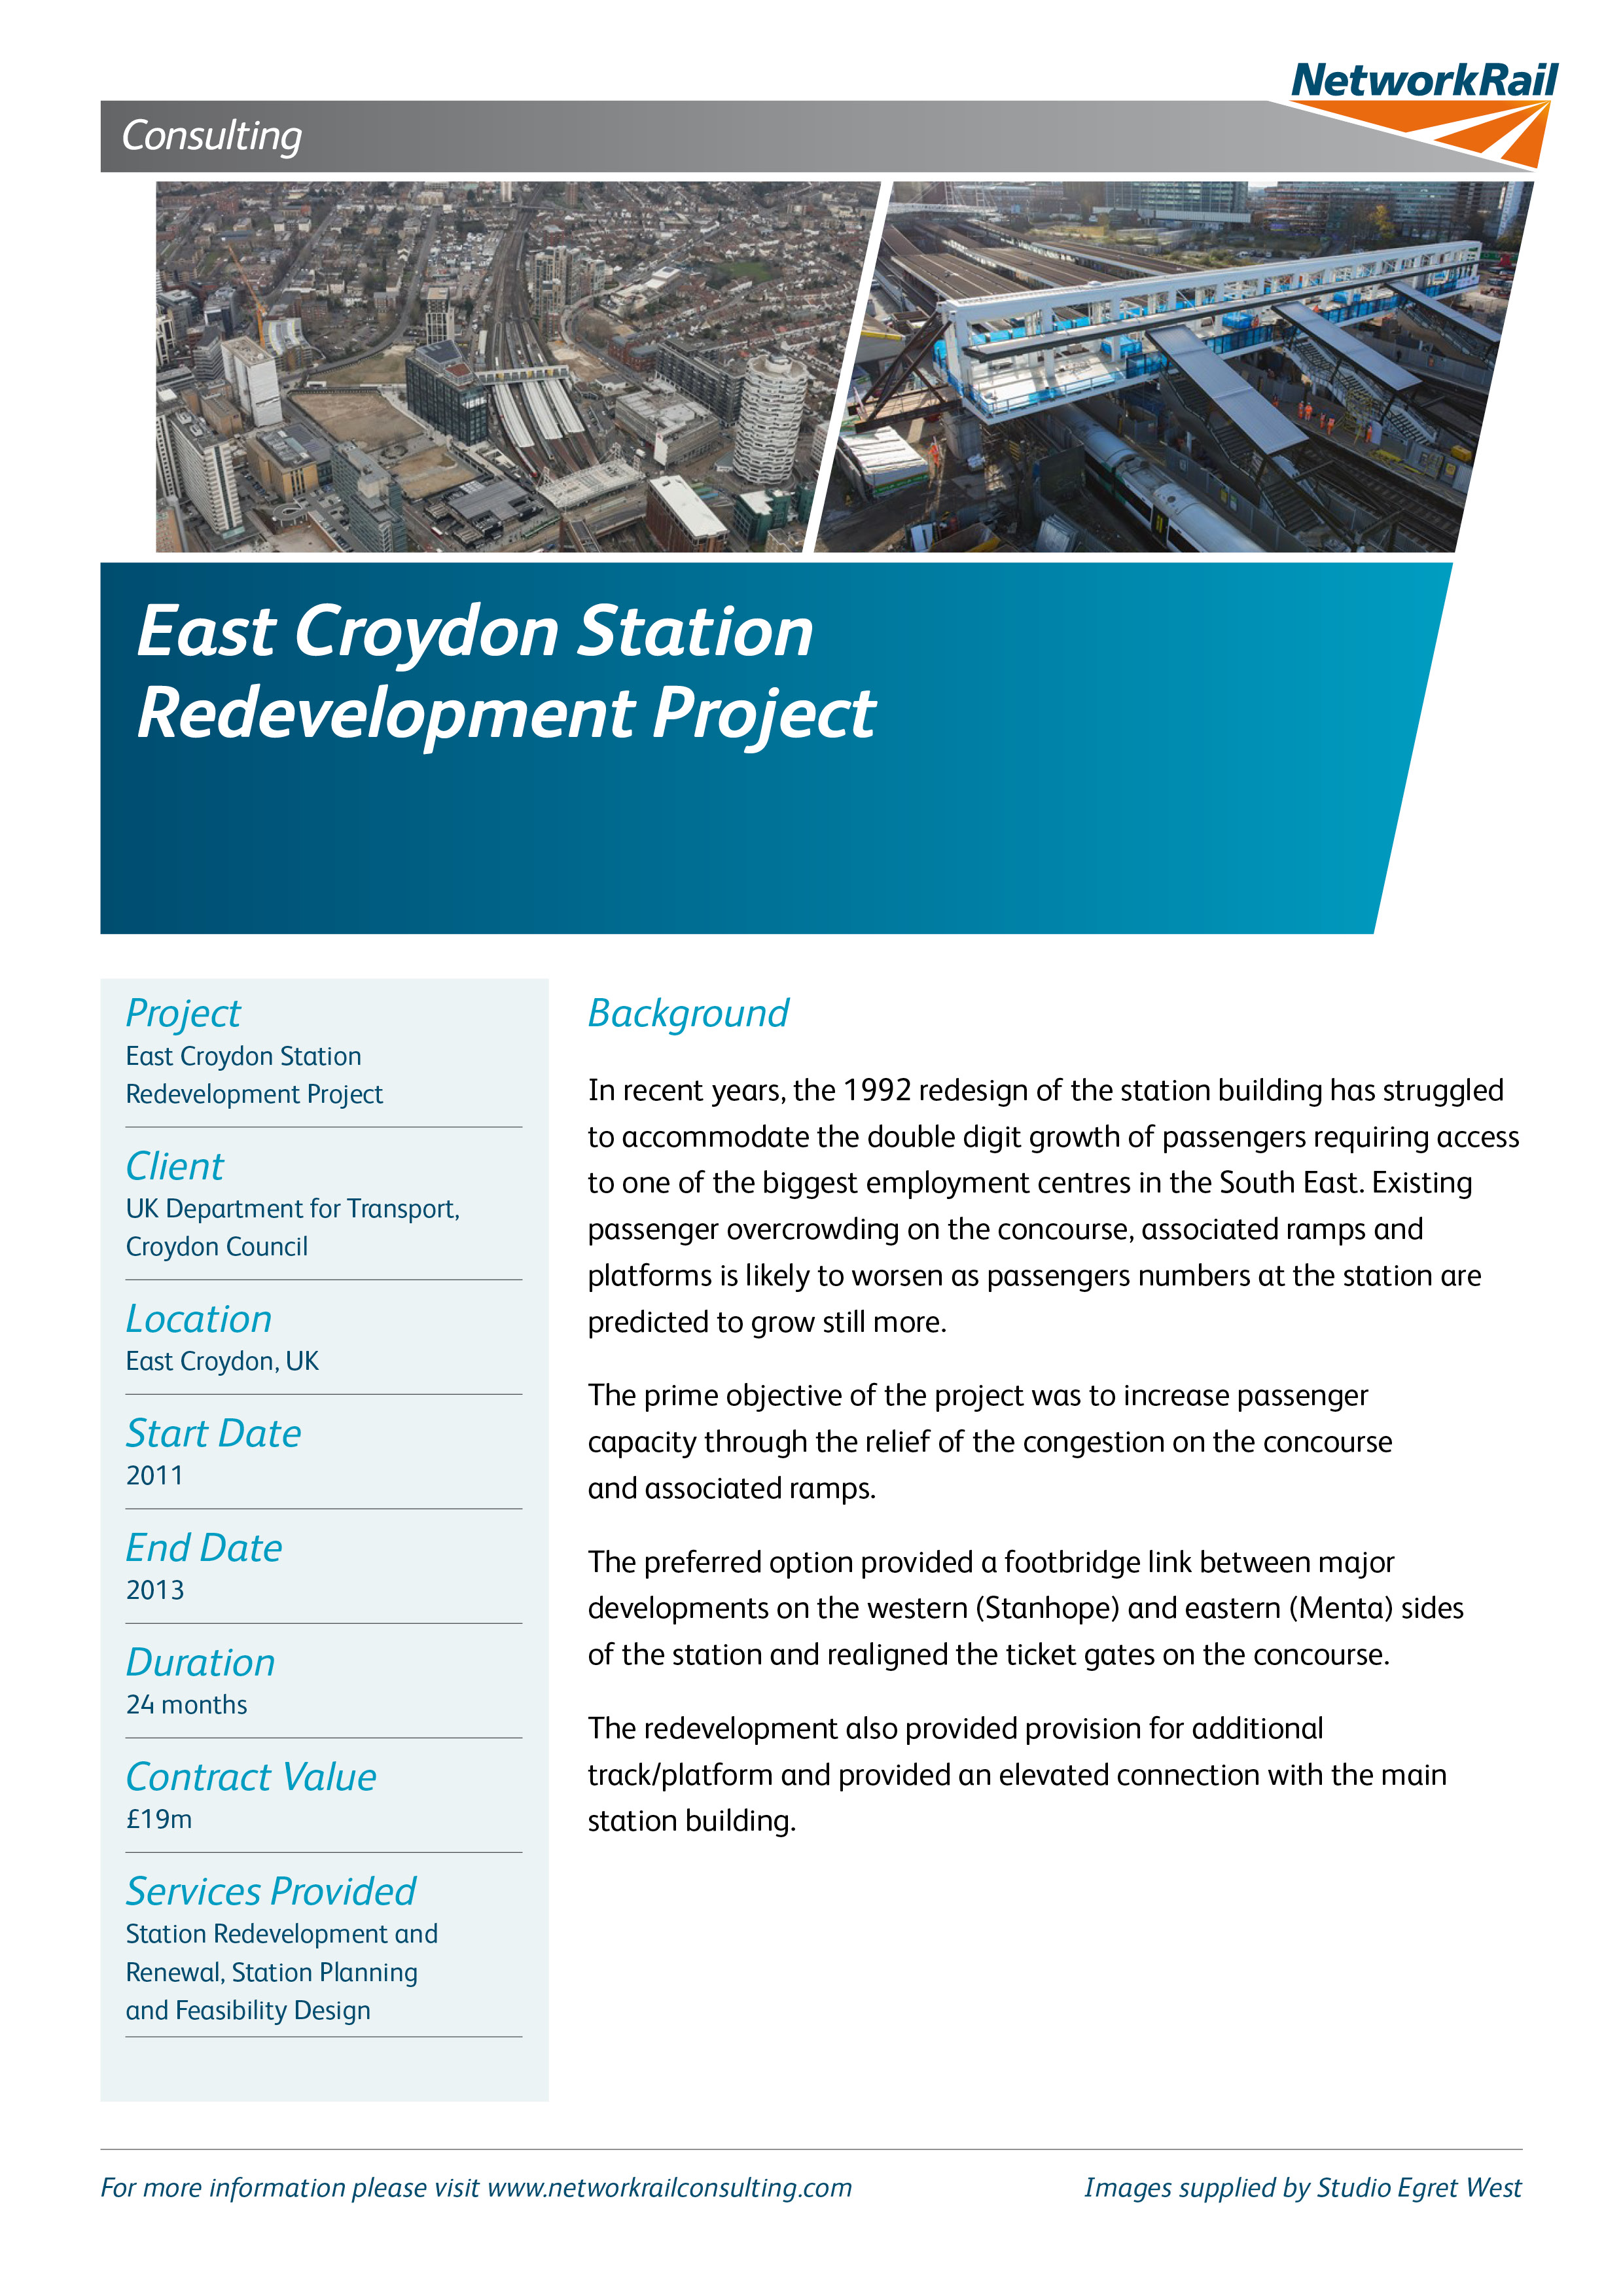 East Croydon Station Redevelopment Project